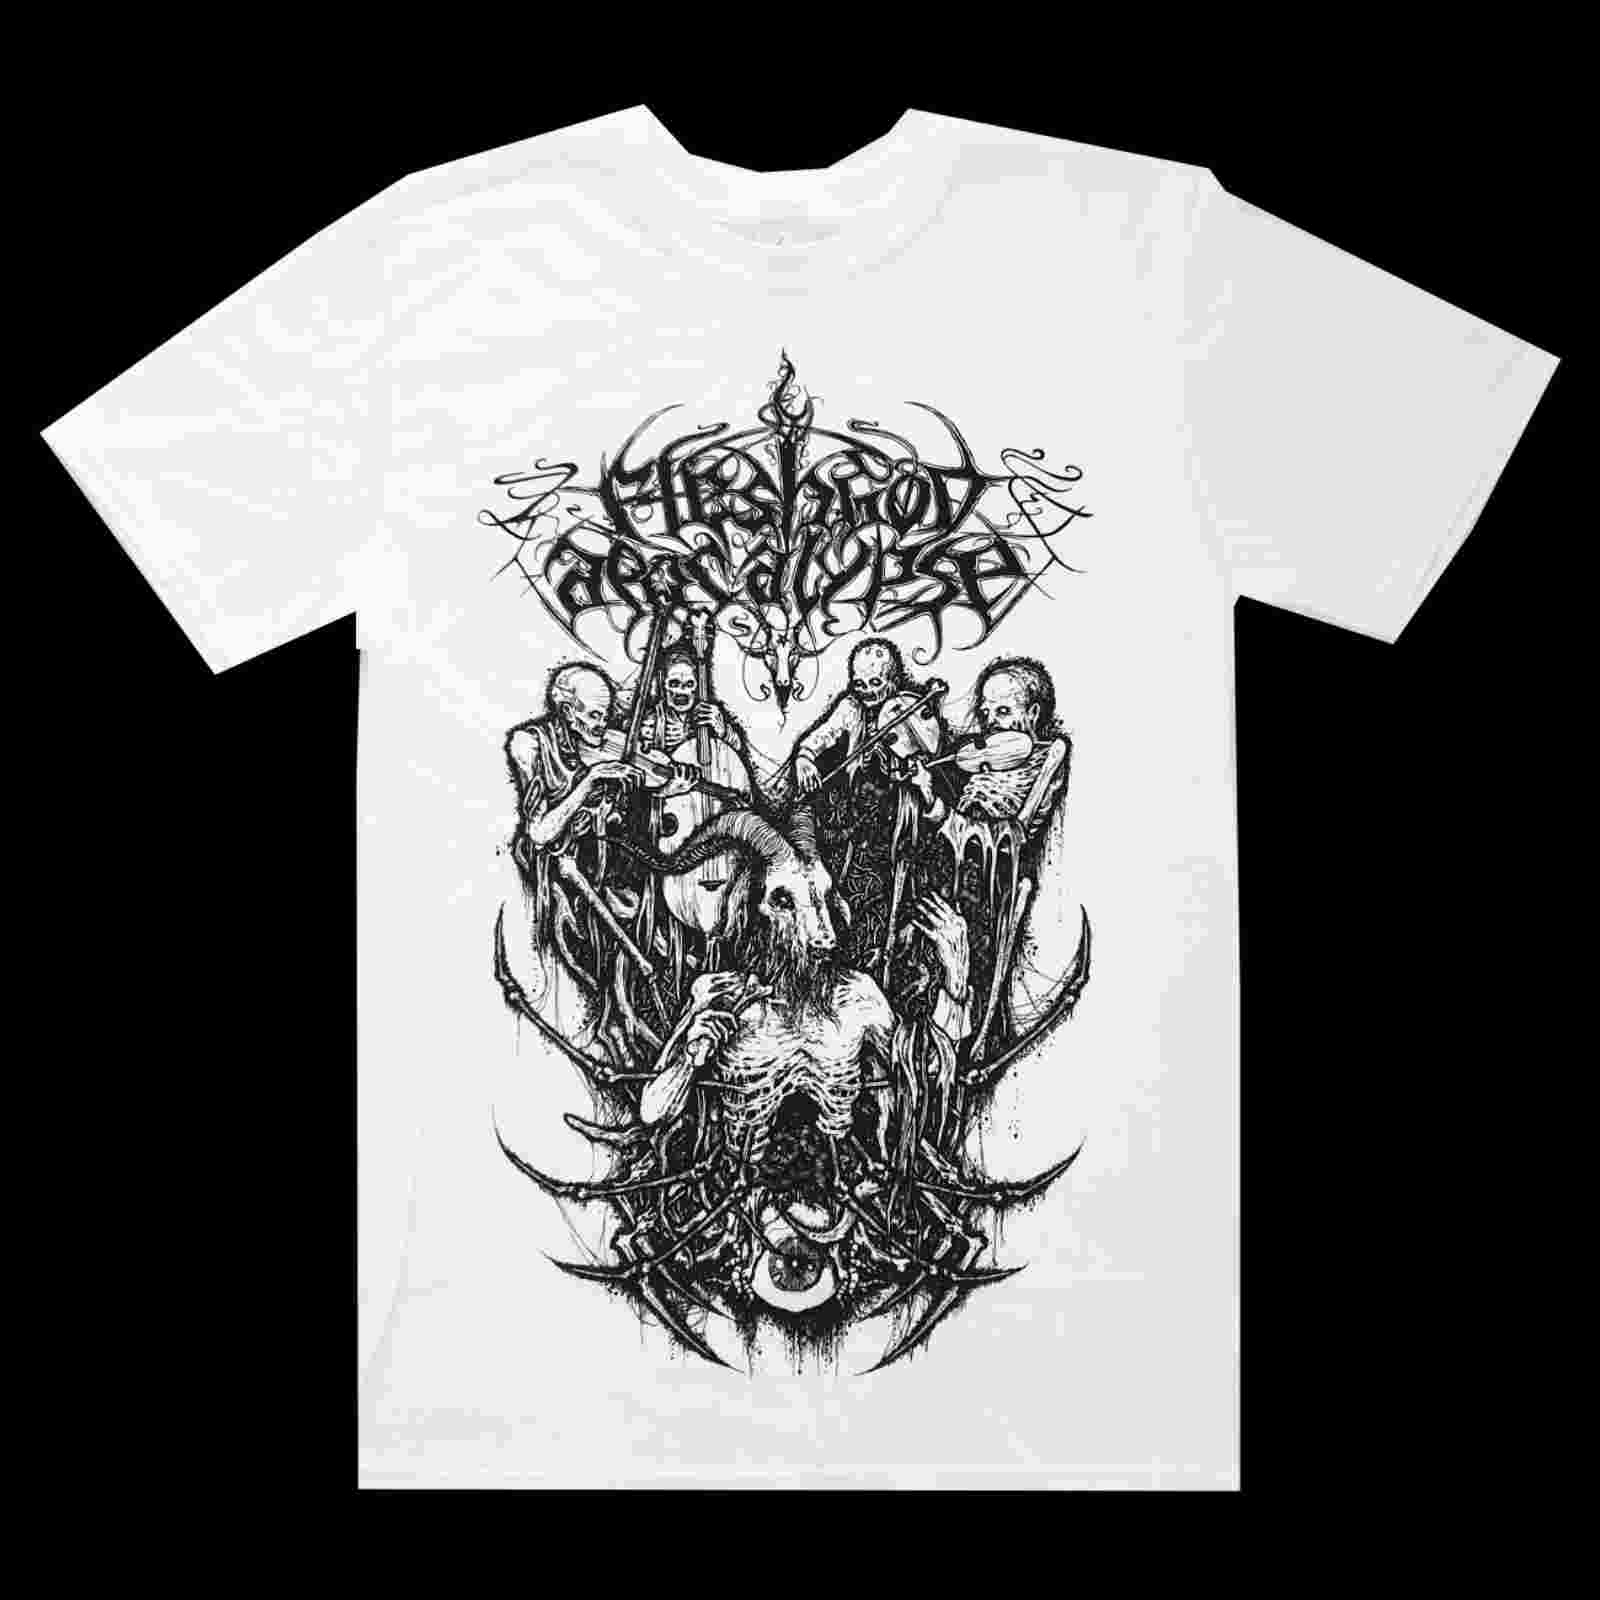 Cavalera Conspiracy Band Fan Shirt 2023 Concert T-Shirt Sweatshirt